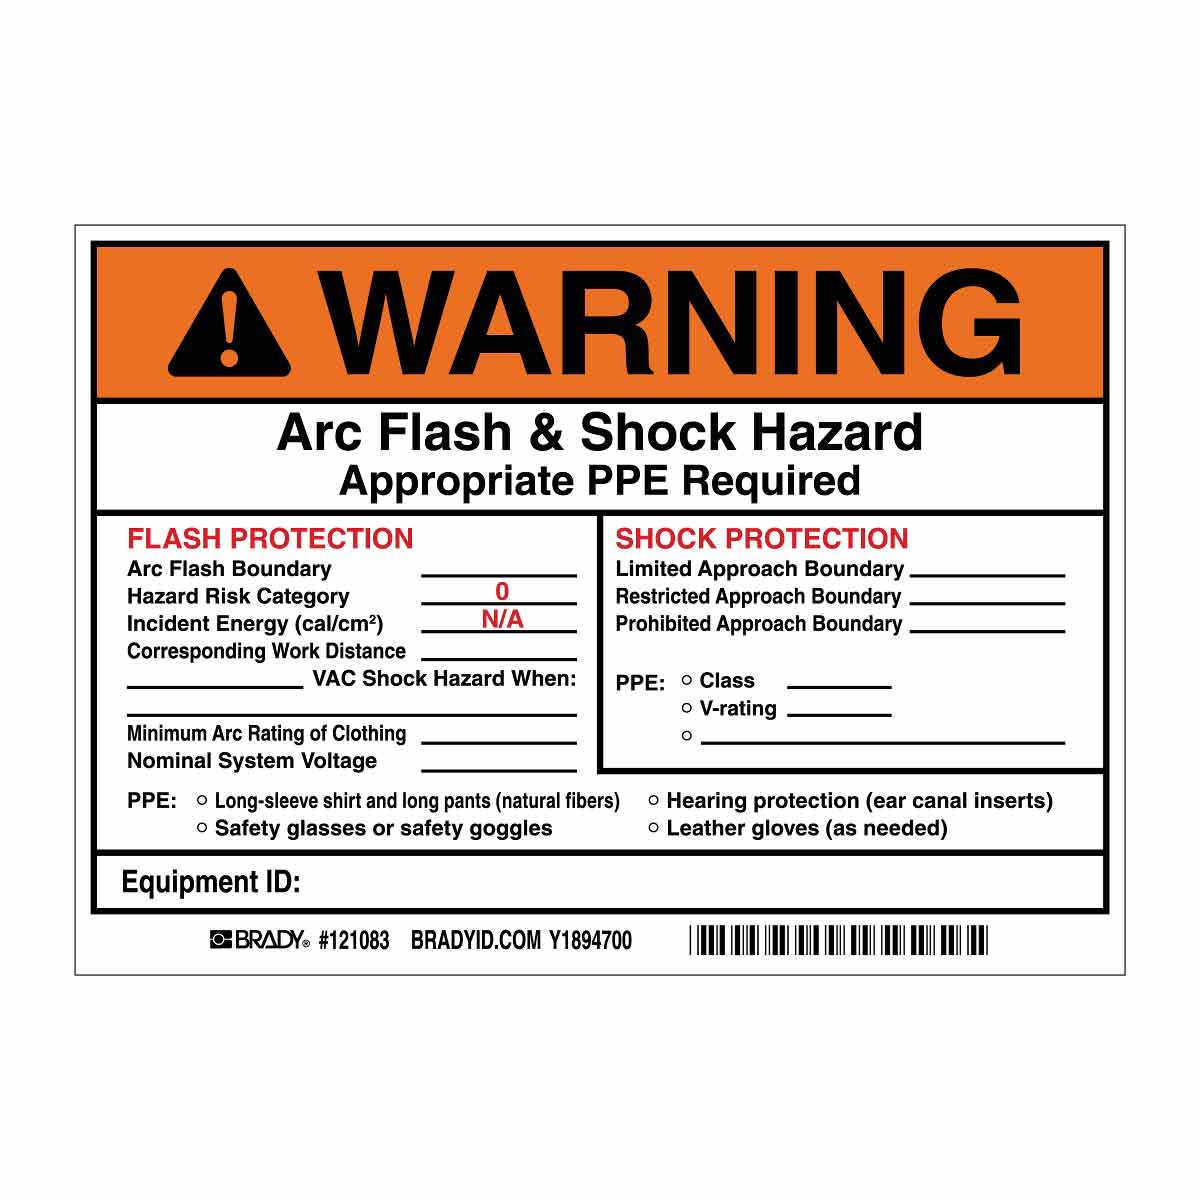 arc flash safety boundaries